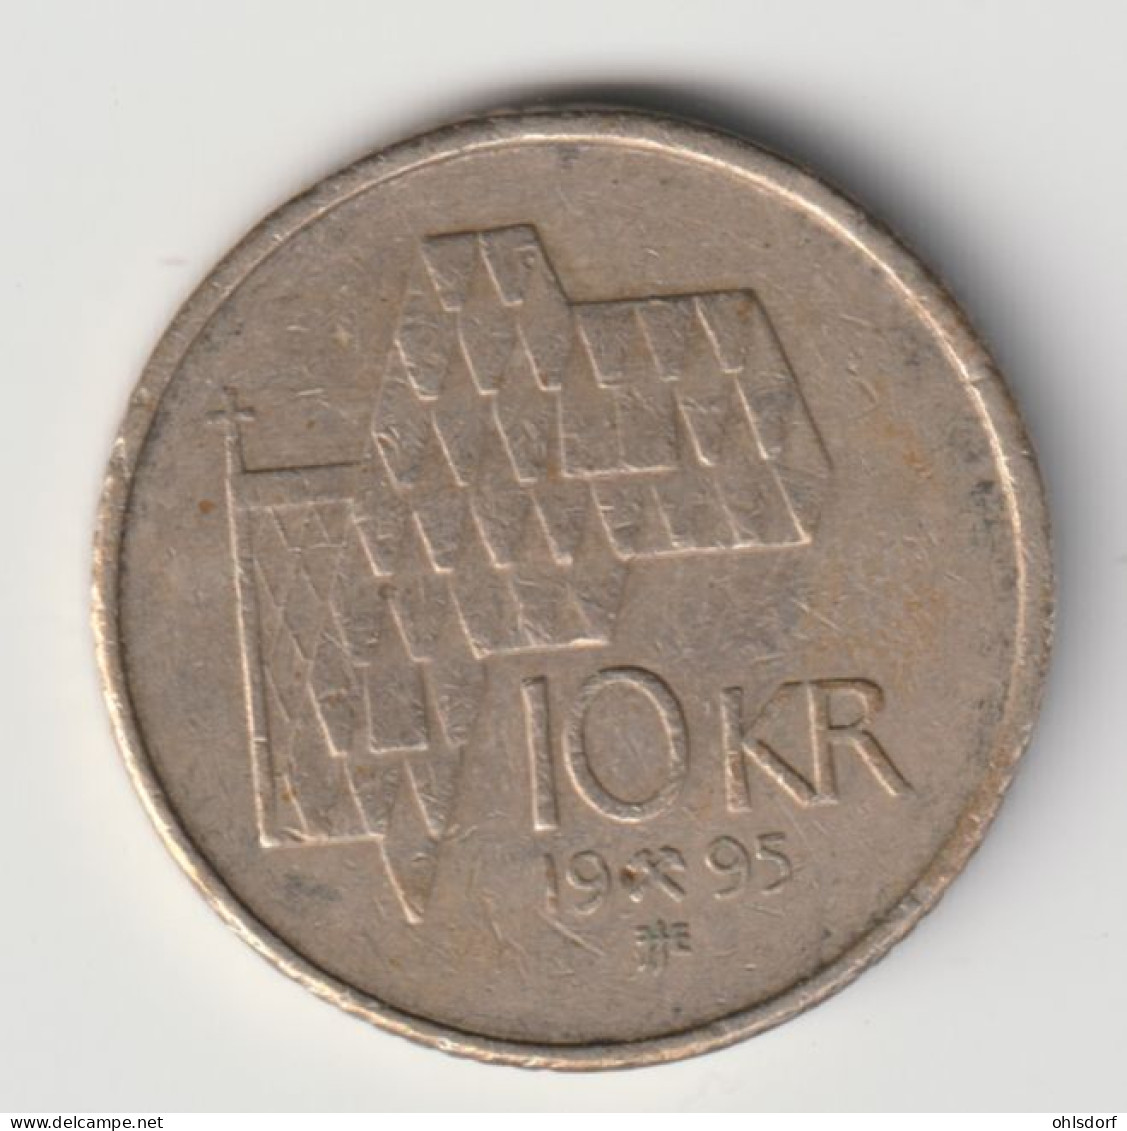 NORGE 1995: 10 Kroner, KM 457 - Norway